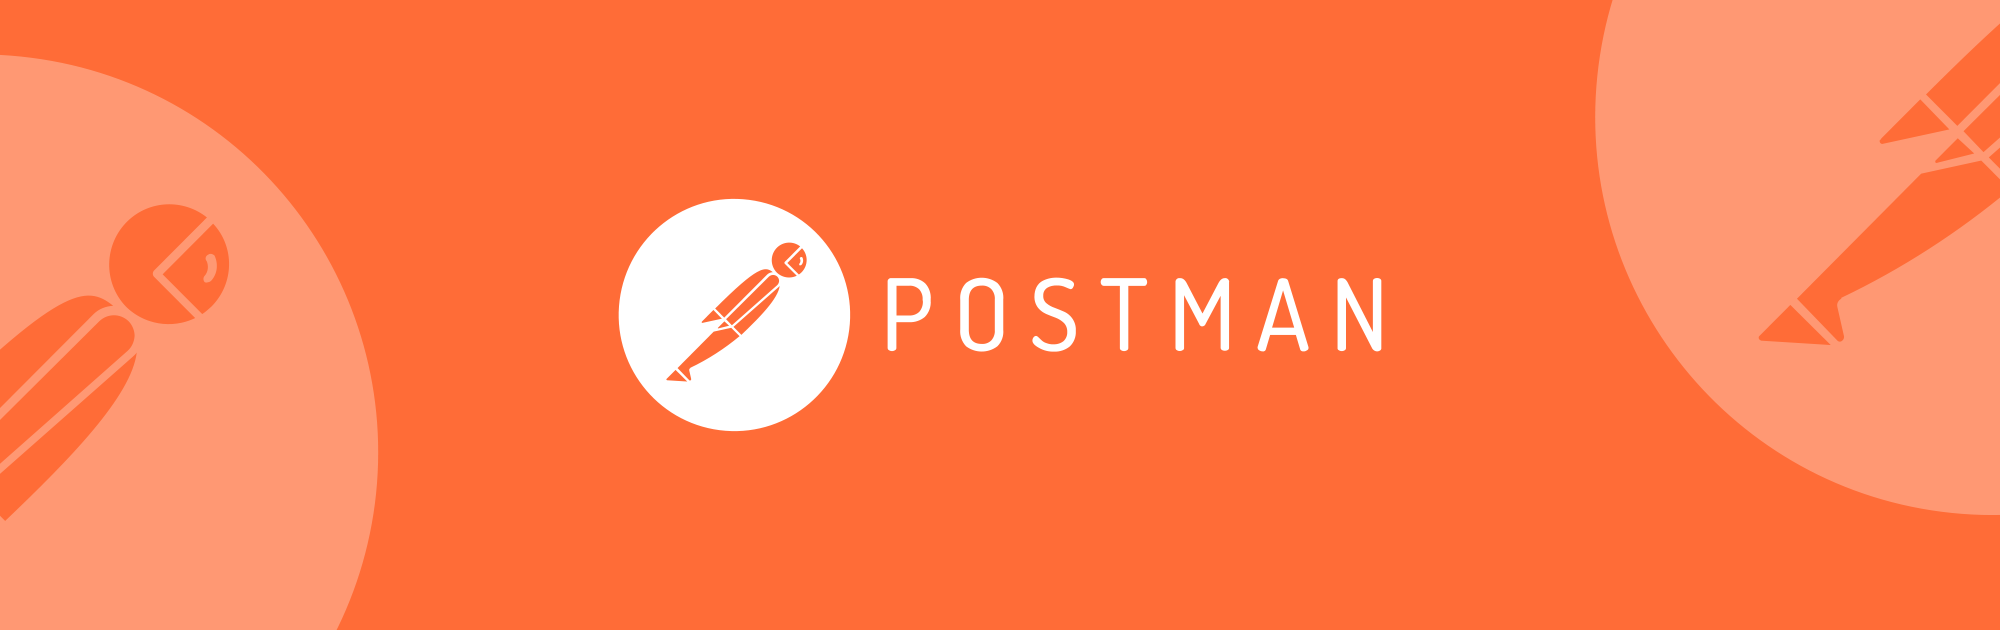 role of postman